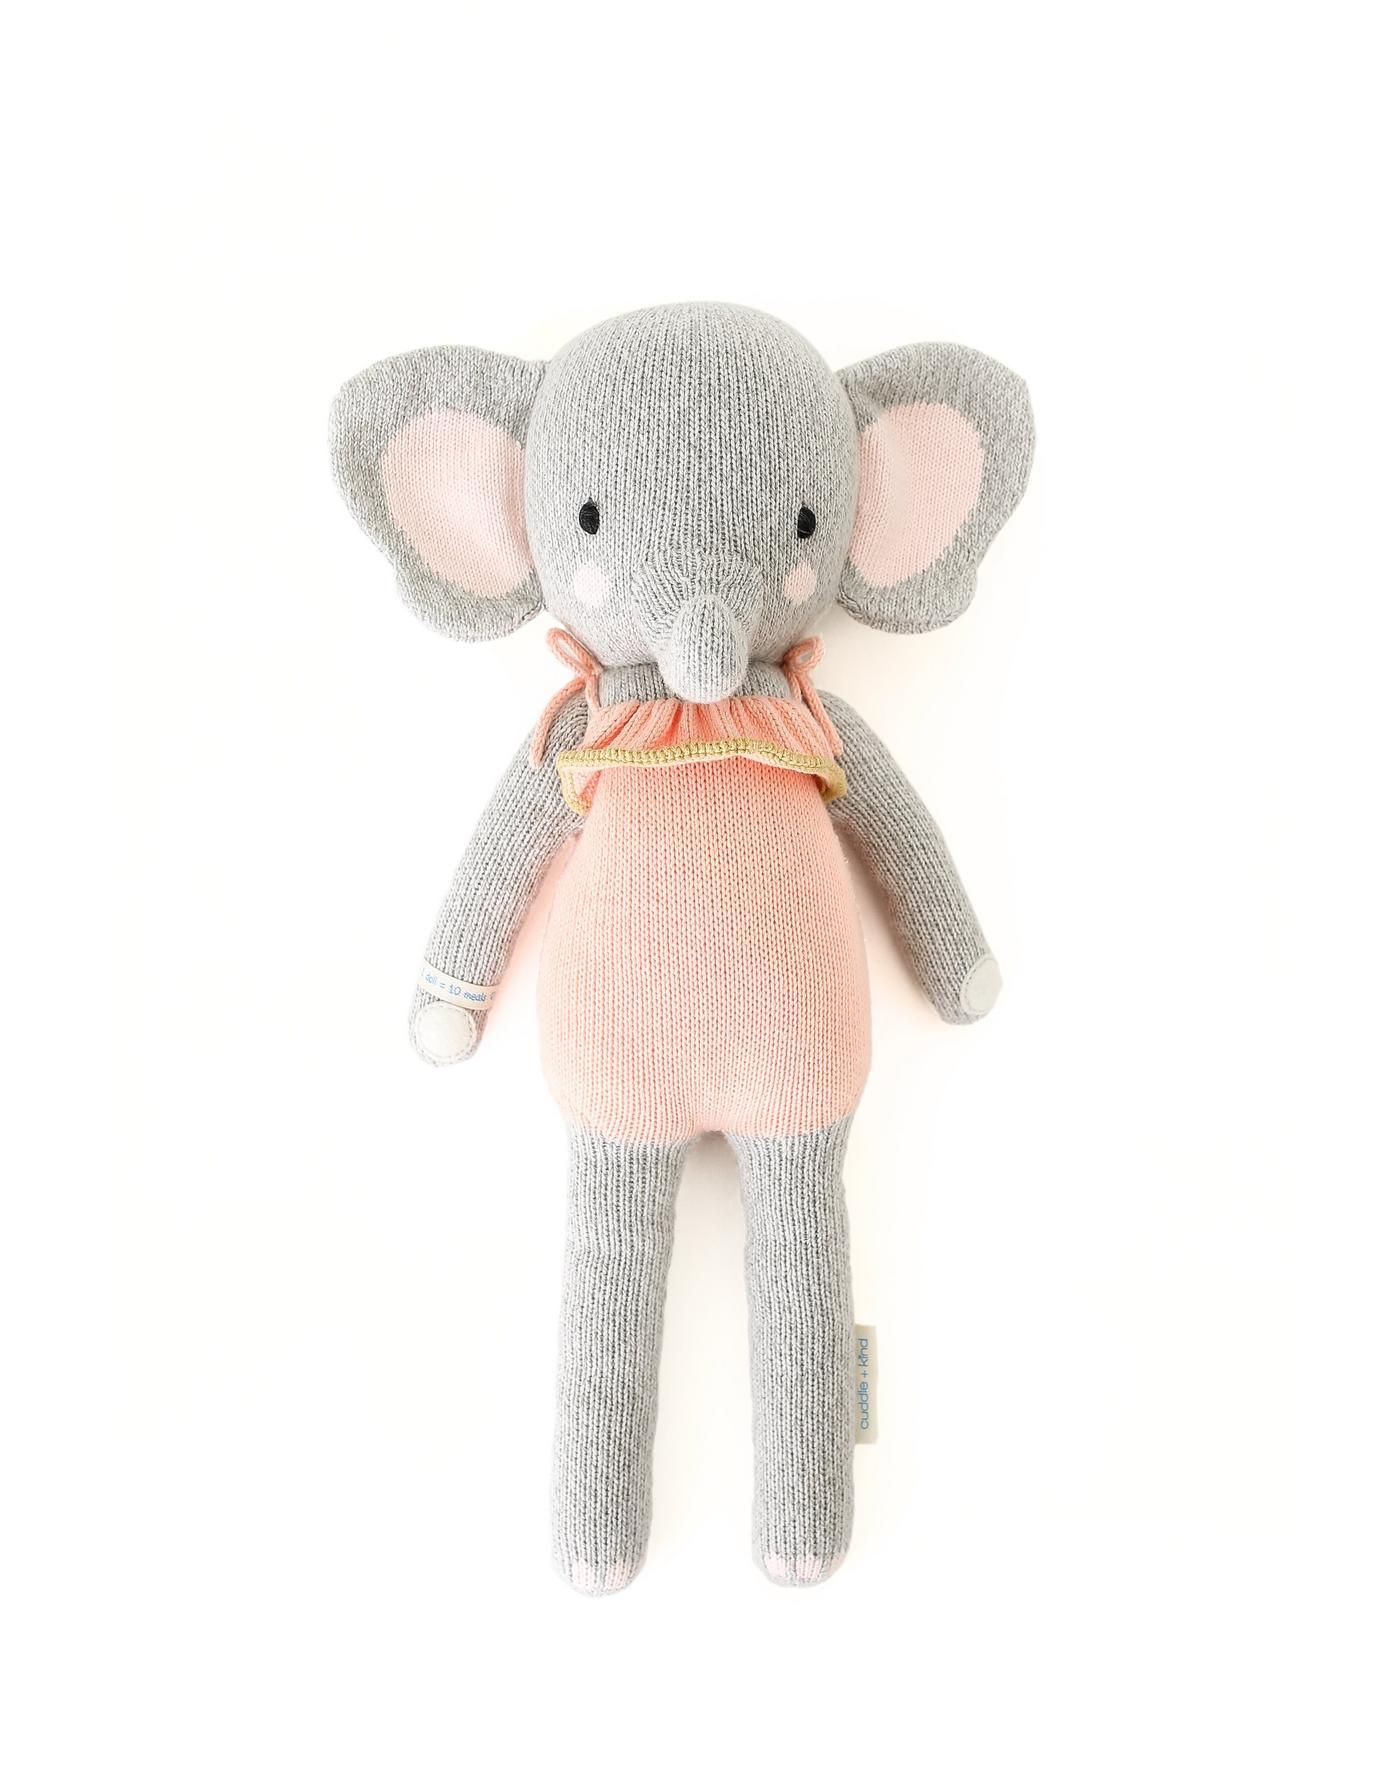 Cuddle + Kind Small Eloise The Elephant Doll | Janie and Jack